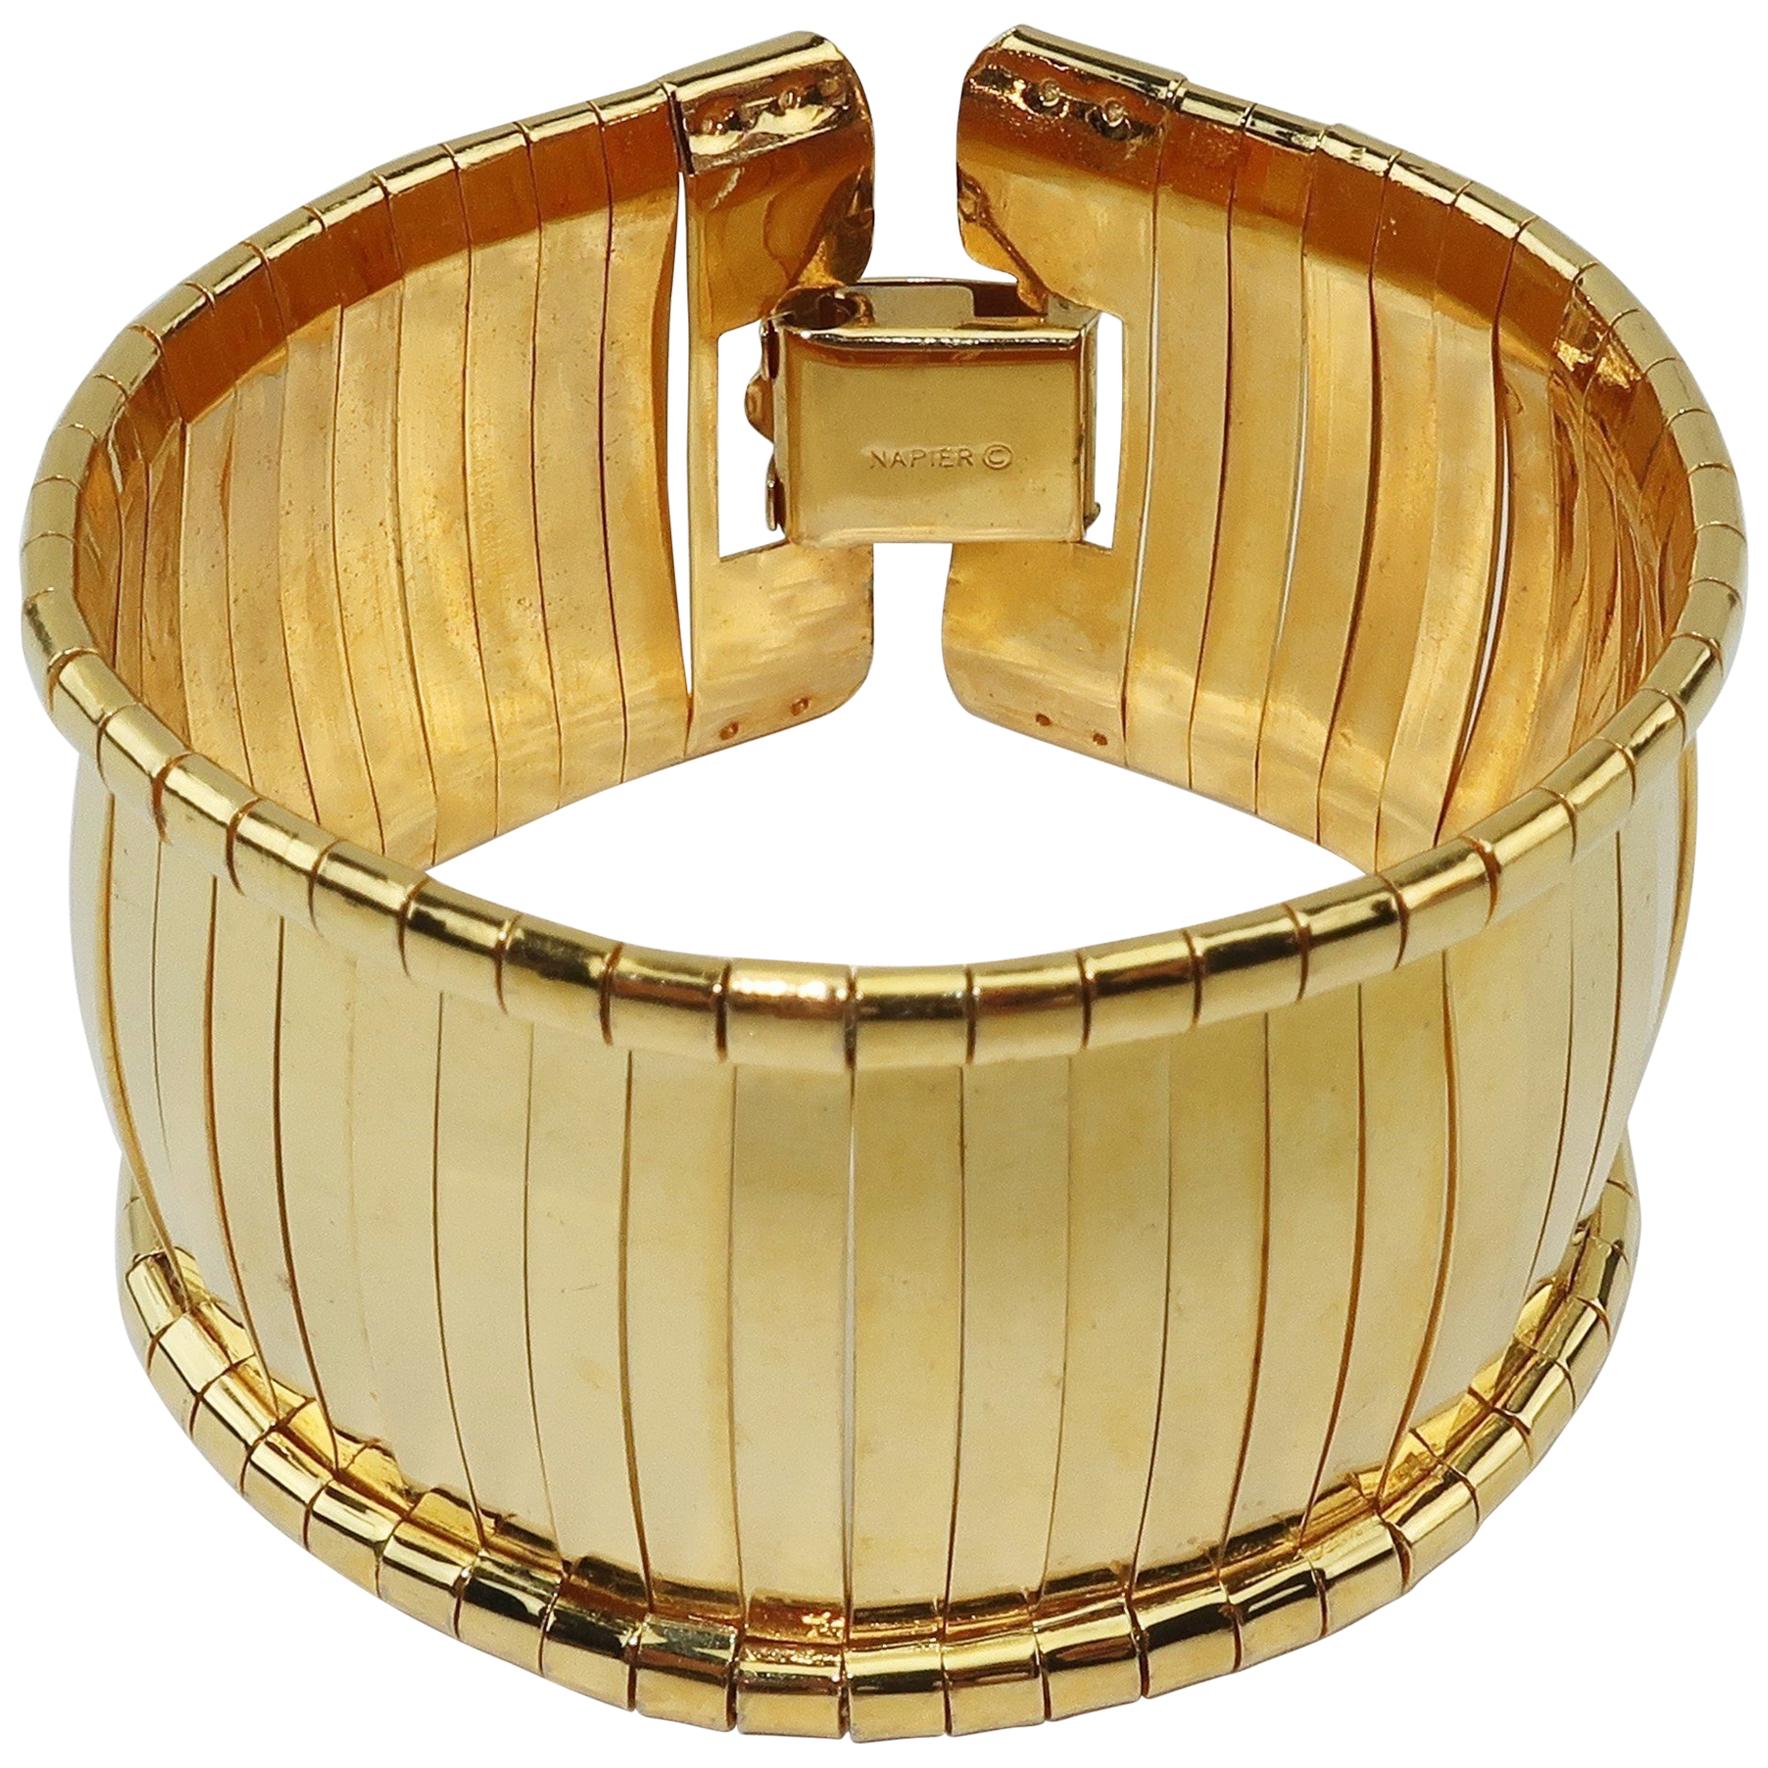 Napier Gold Band Space Age Bangle Bracelet, 1960's